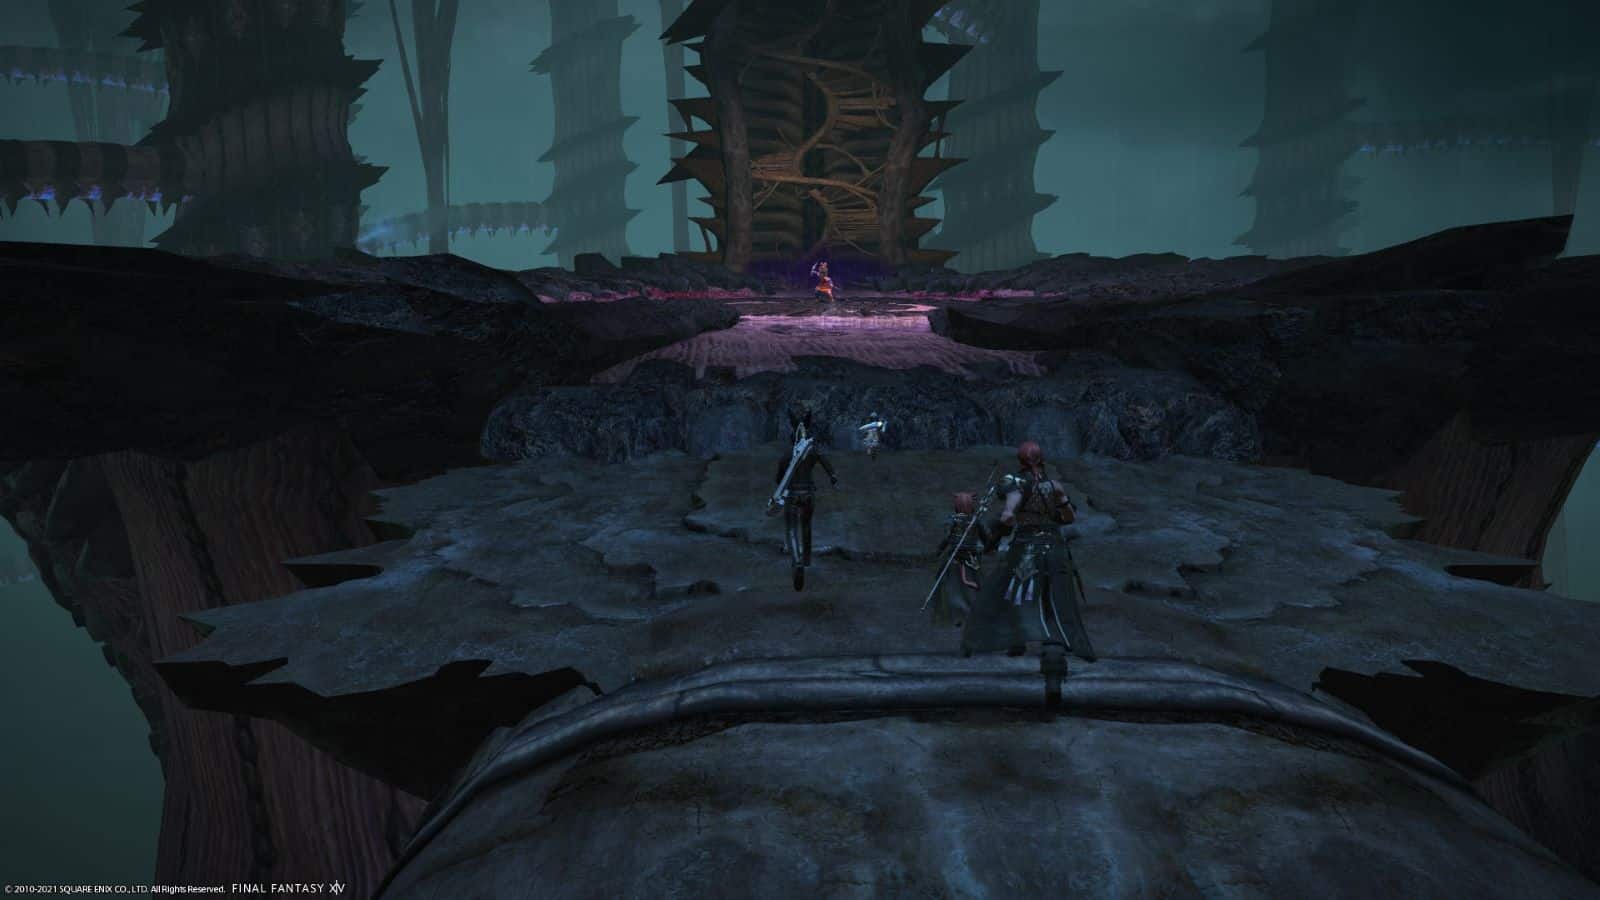 Final Fantasy XIV's Endwalker Tower of Zot dungeon